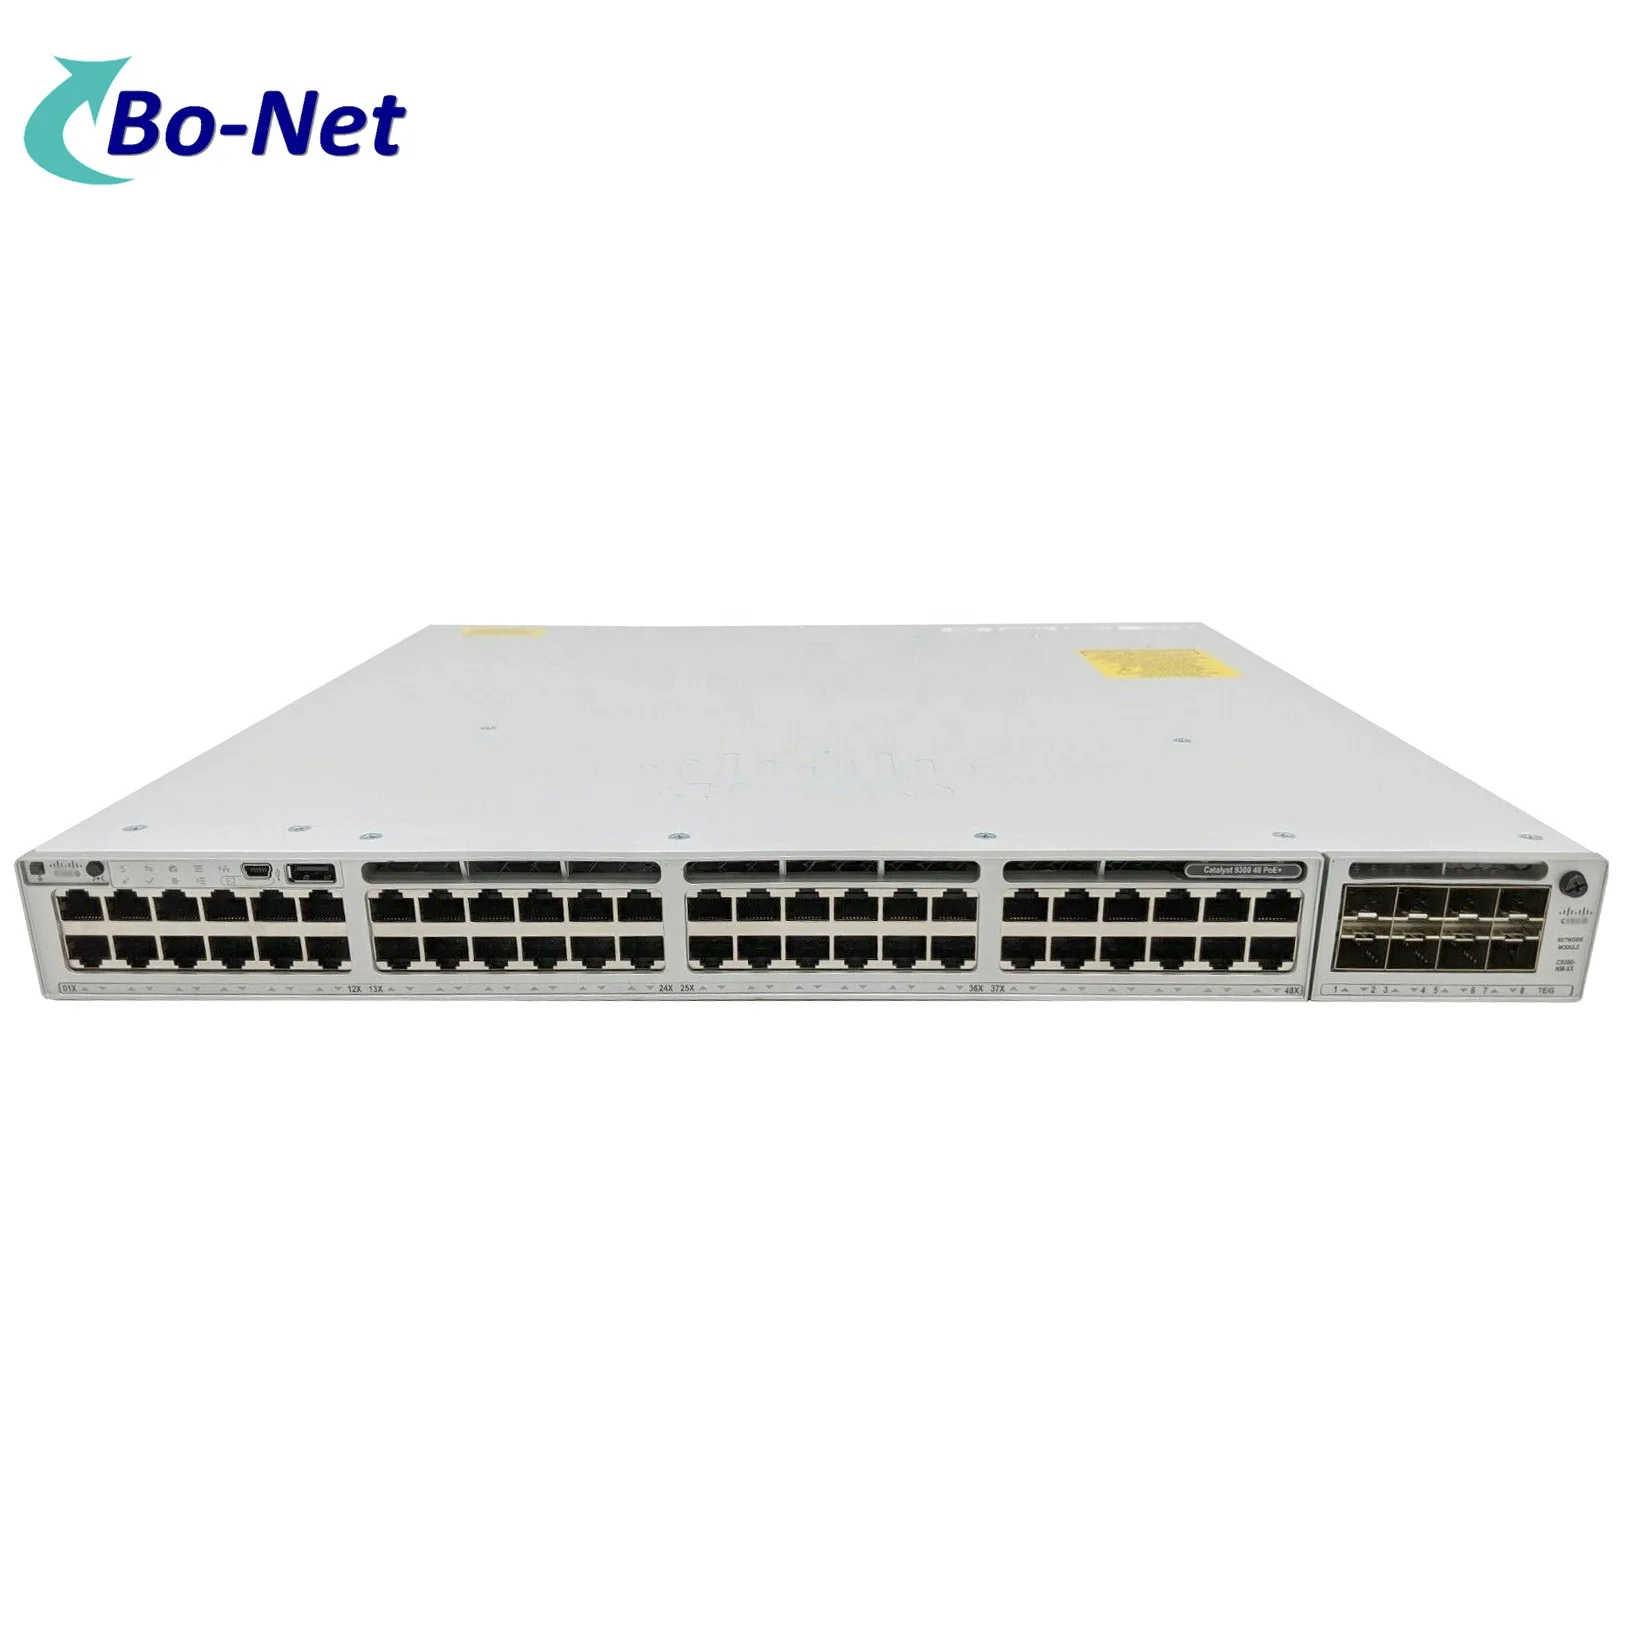 

New C9300 Series C9300-48P-A 48 Port PoE+ Network Advantage Switch, C9300-NM-8X